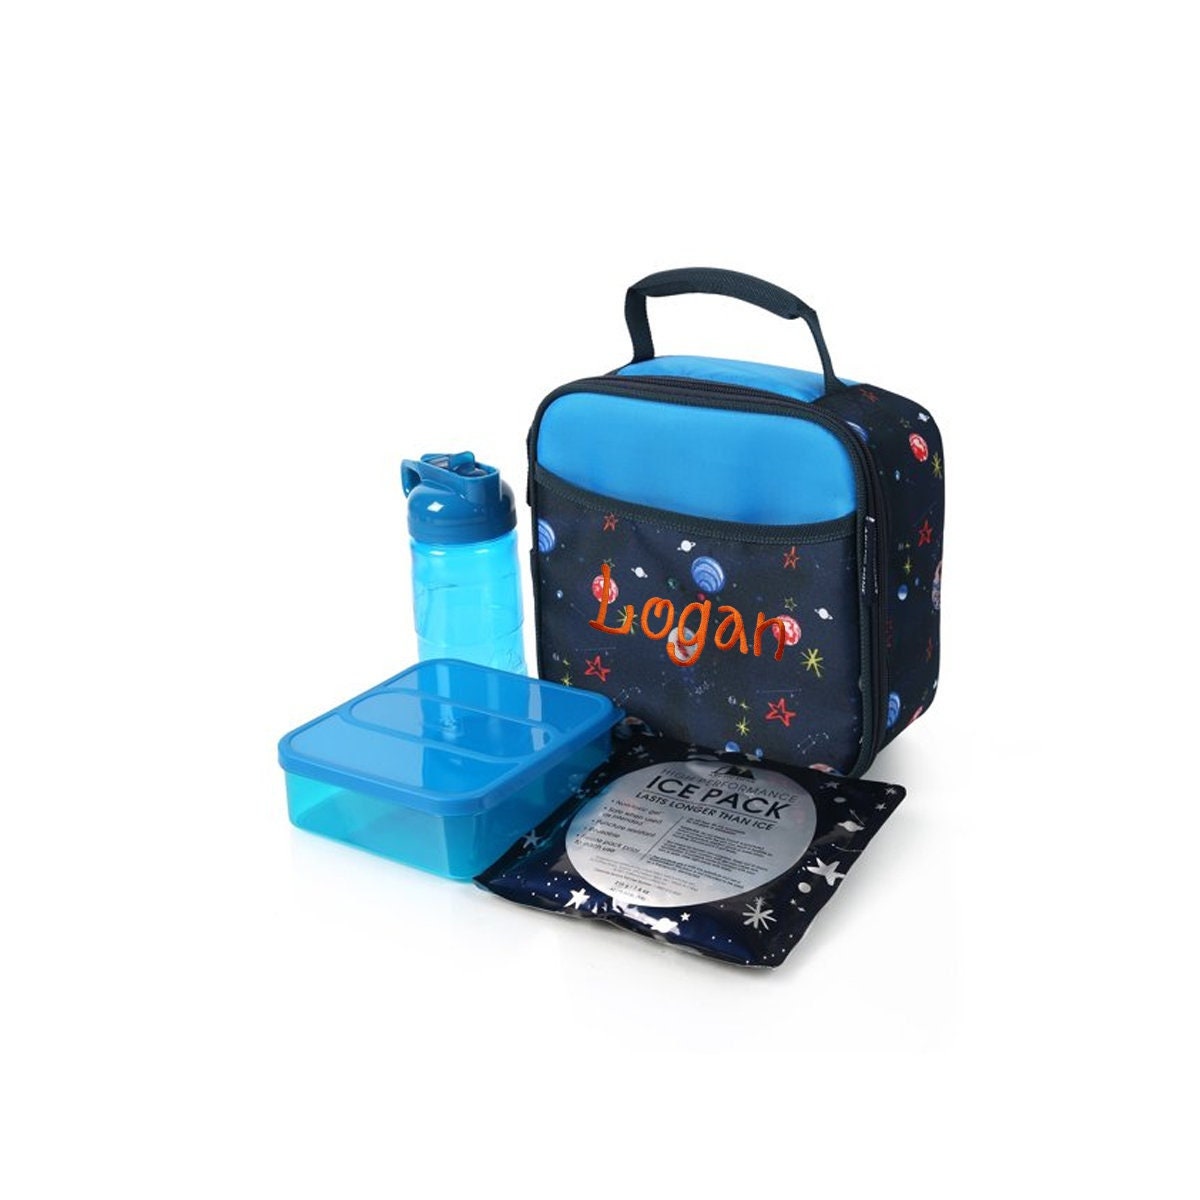 Arctic Zone Lunch Box Combo with Accessories, Unicorn